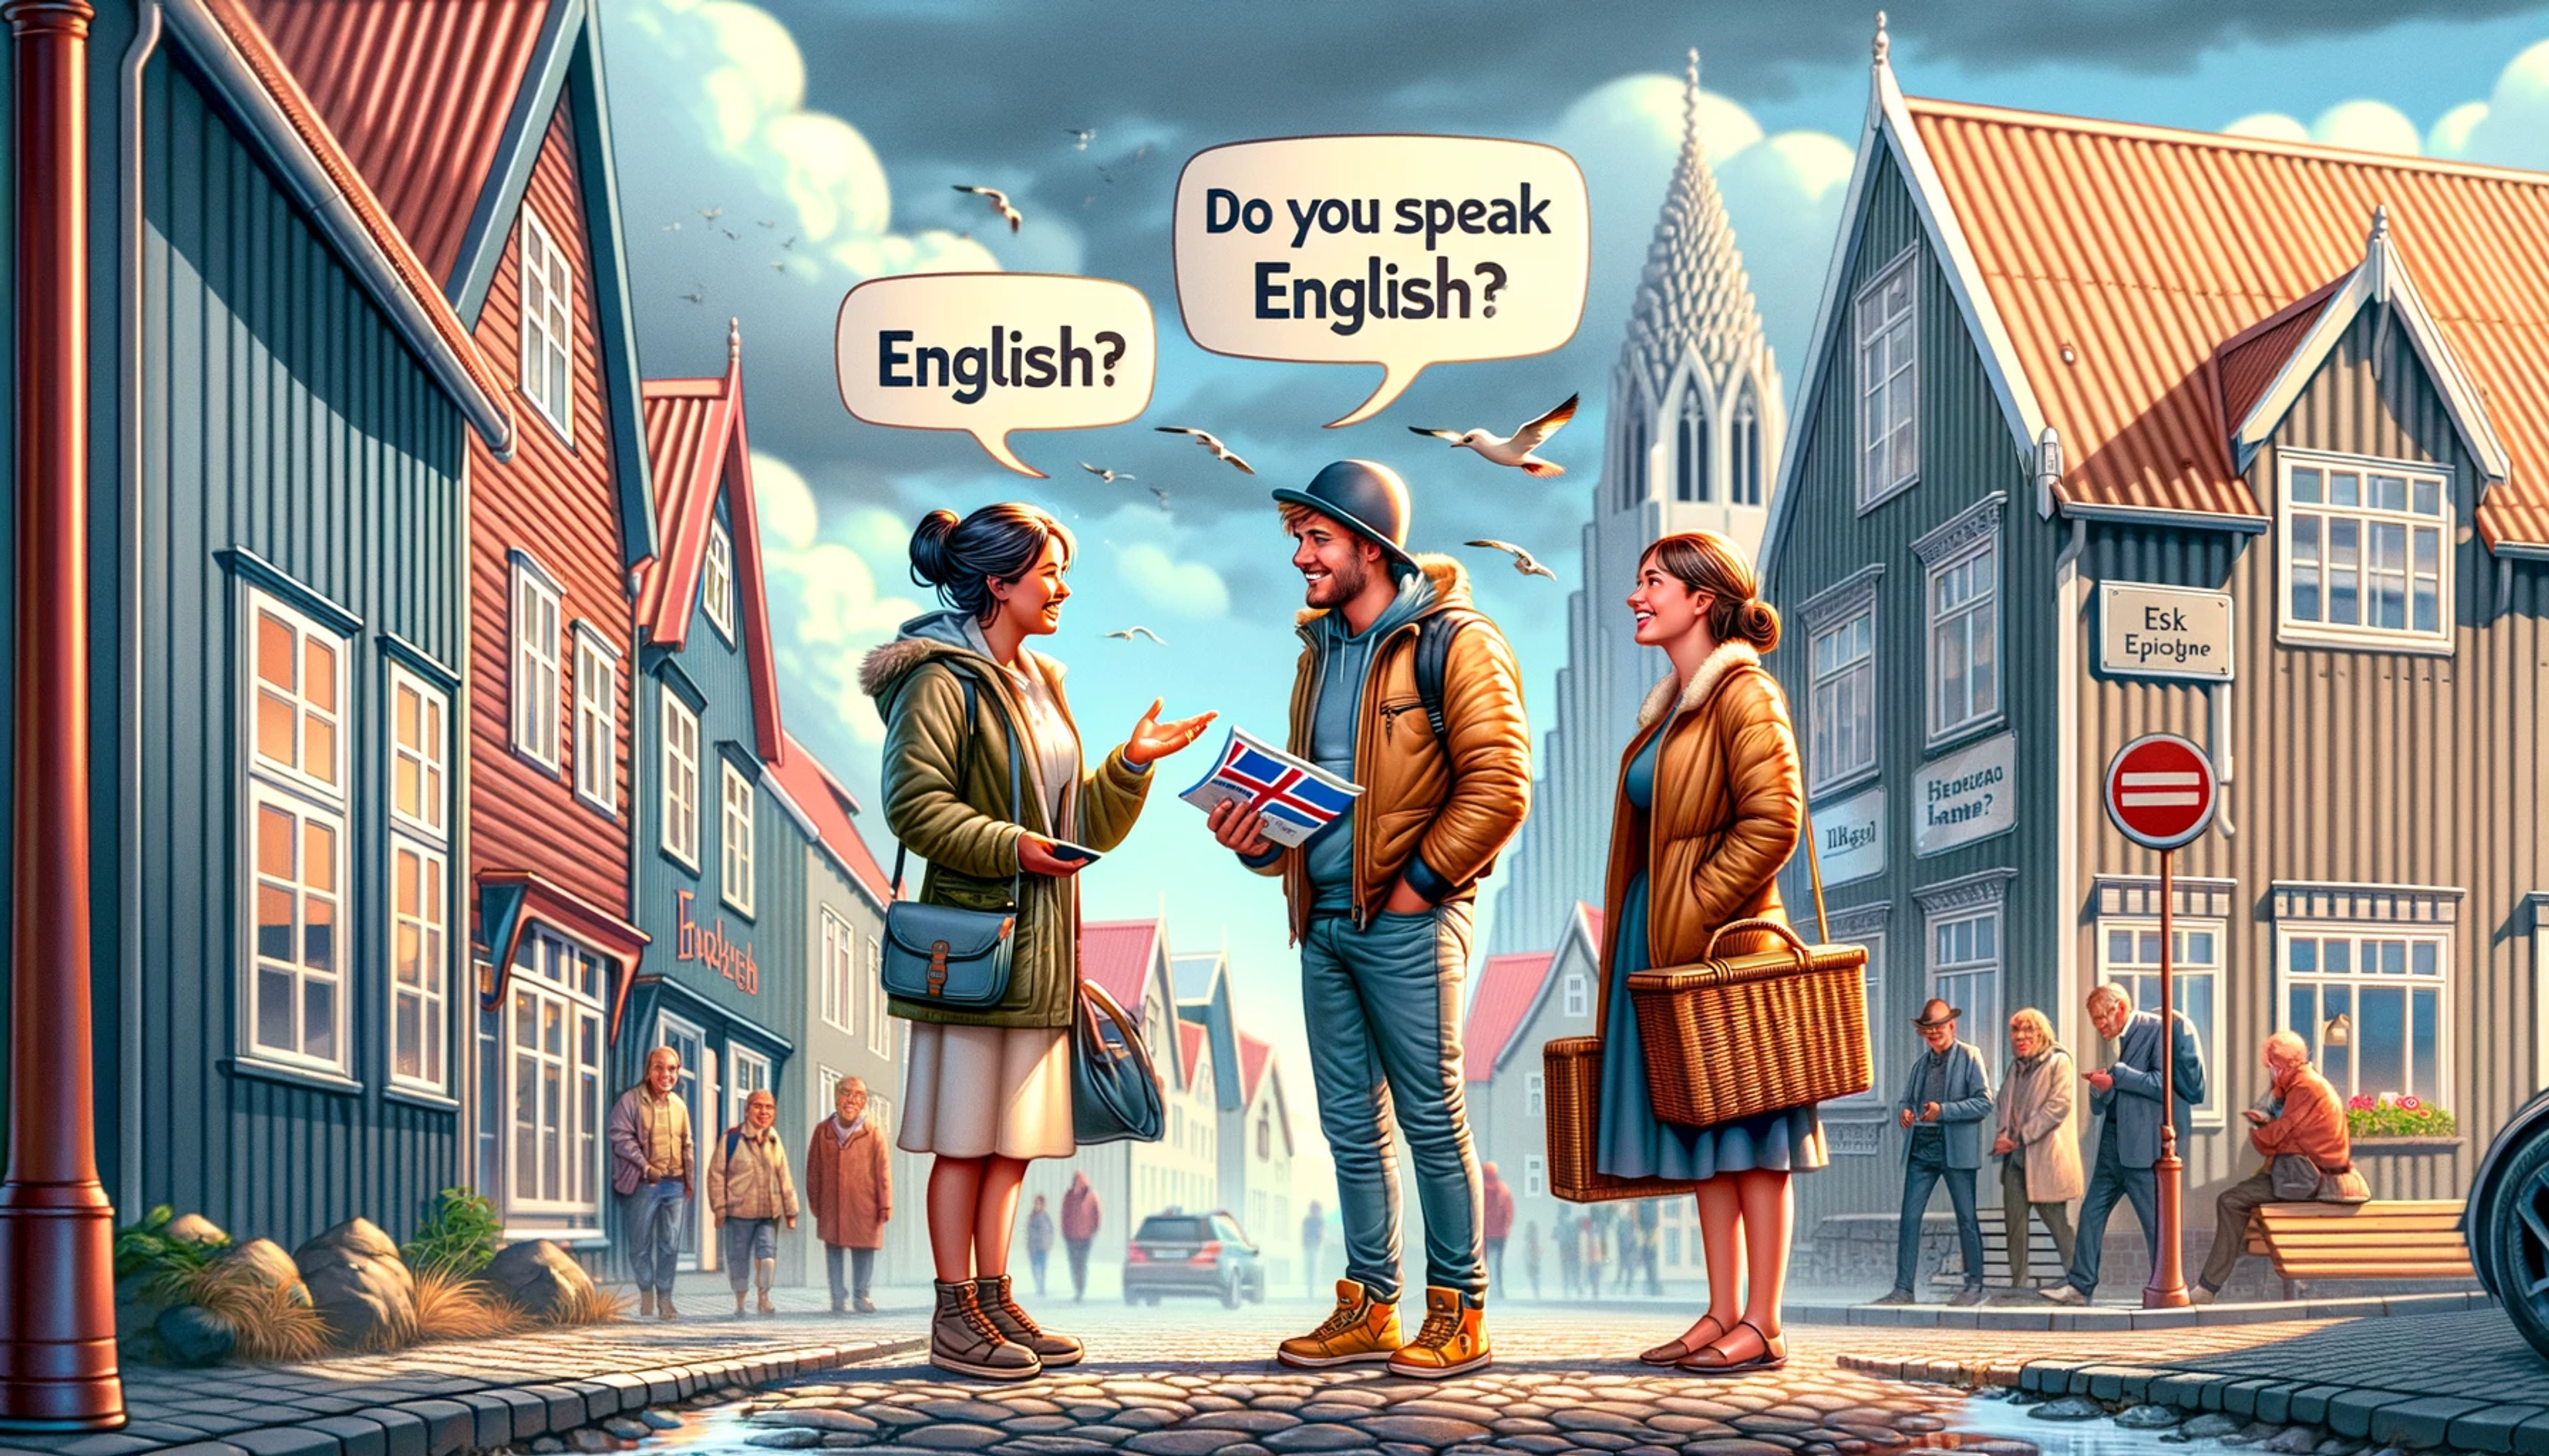 a tourist asks a local: Do you speak English